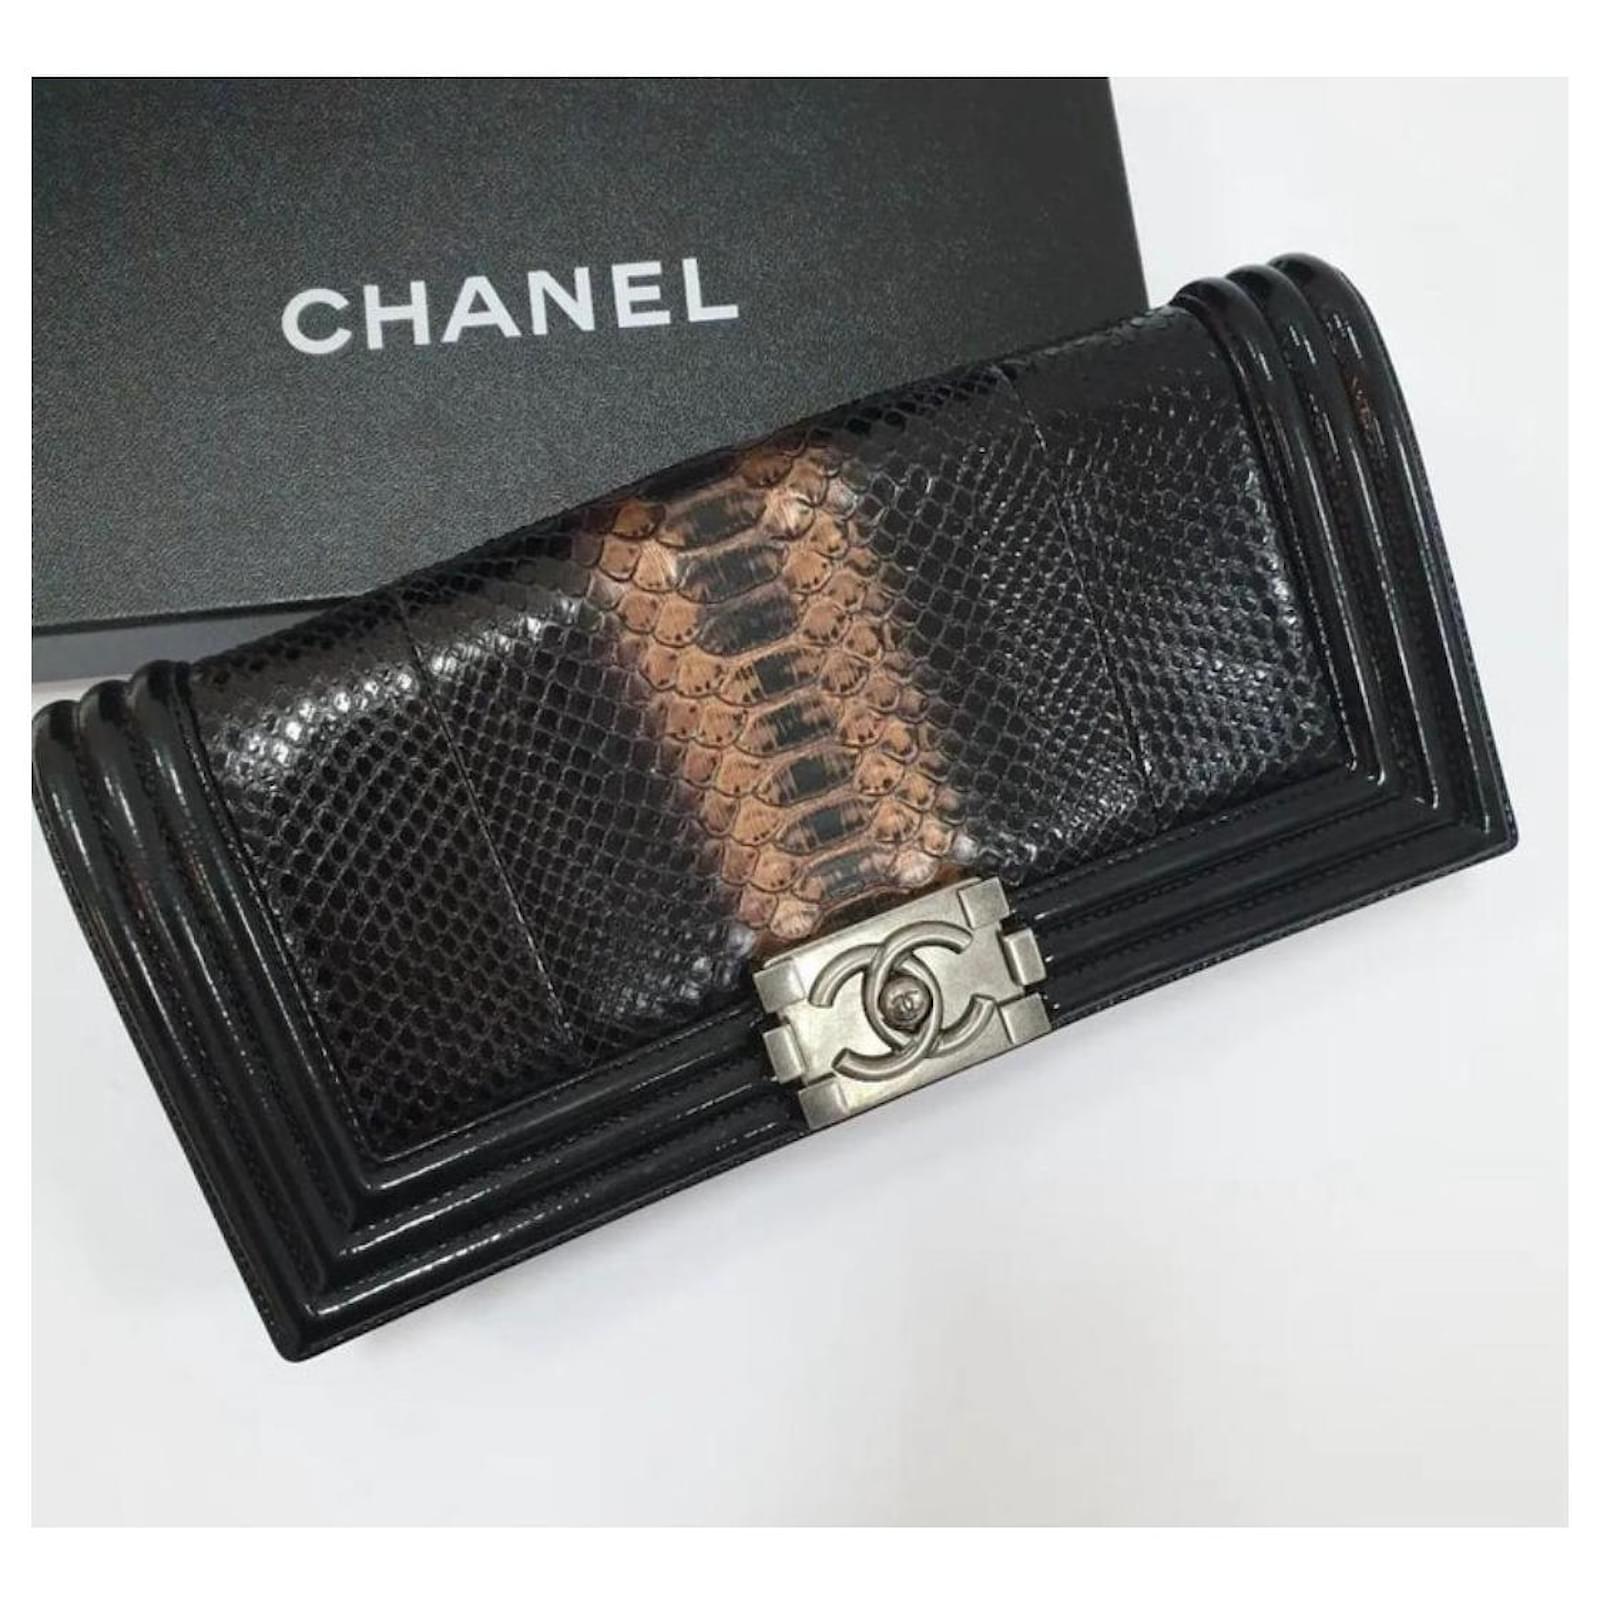 Clutch Bags Chanel Chanel Python Patent Boy Clutch Bag